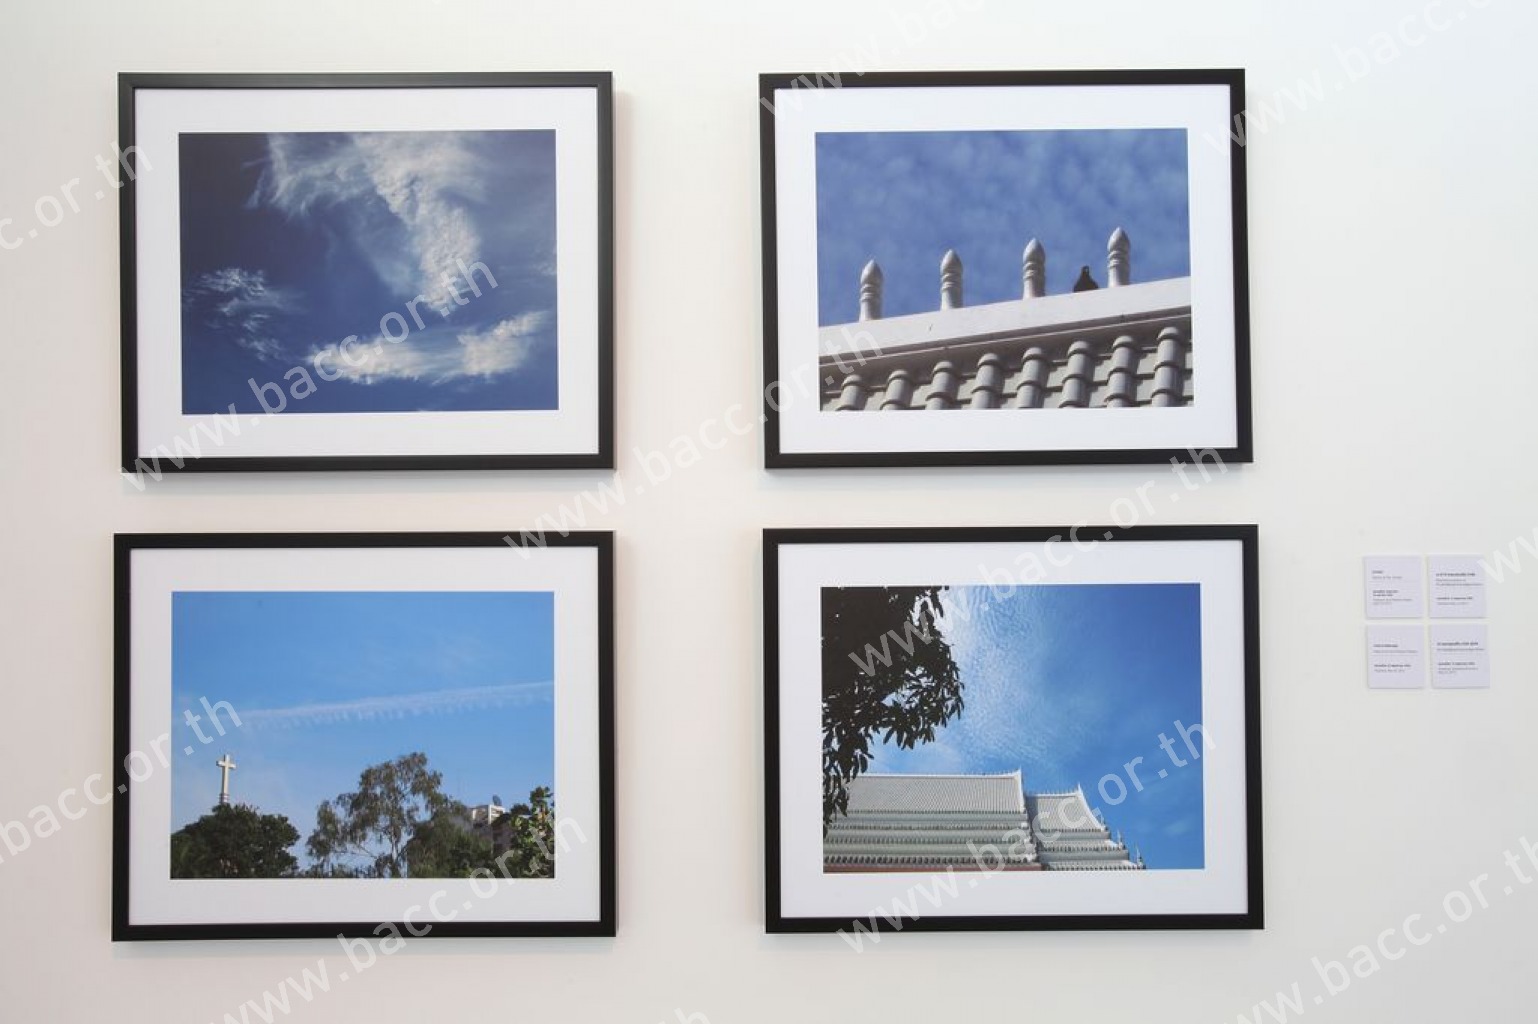 Photography Exhibition by H.R.H. Princess Maha Chakri Sirindhorn “Traveling Photos, Photos Traveling”